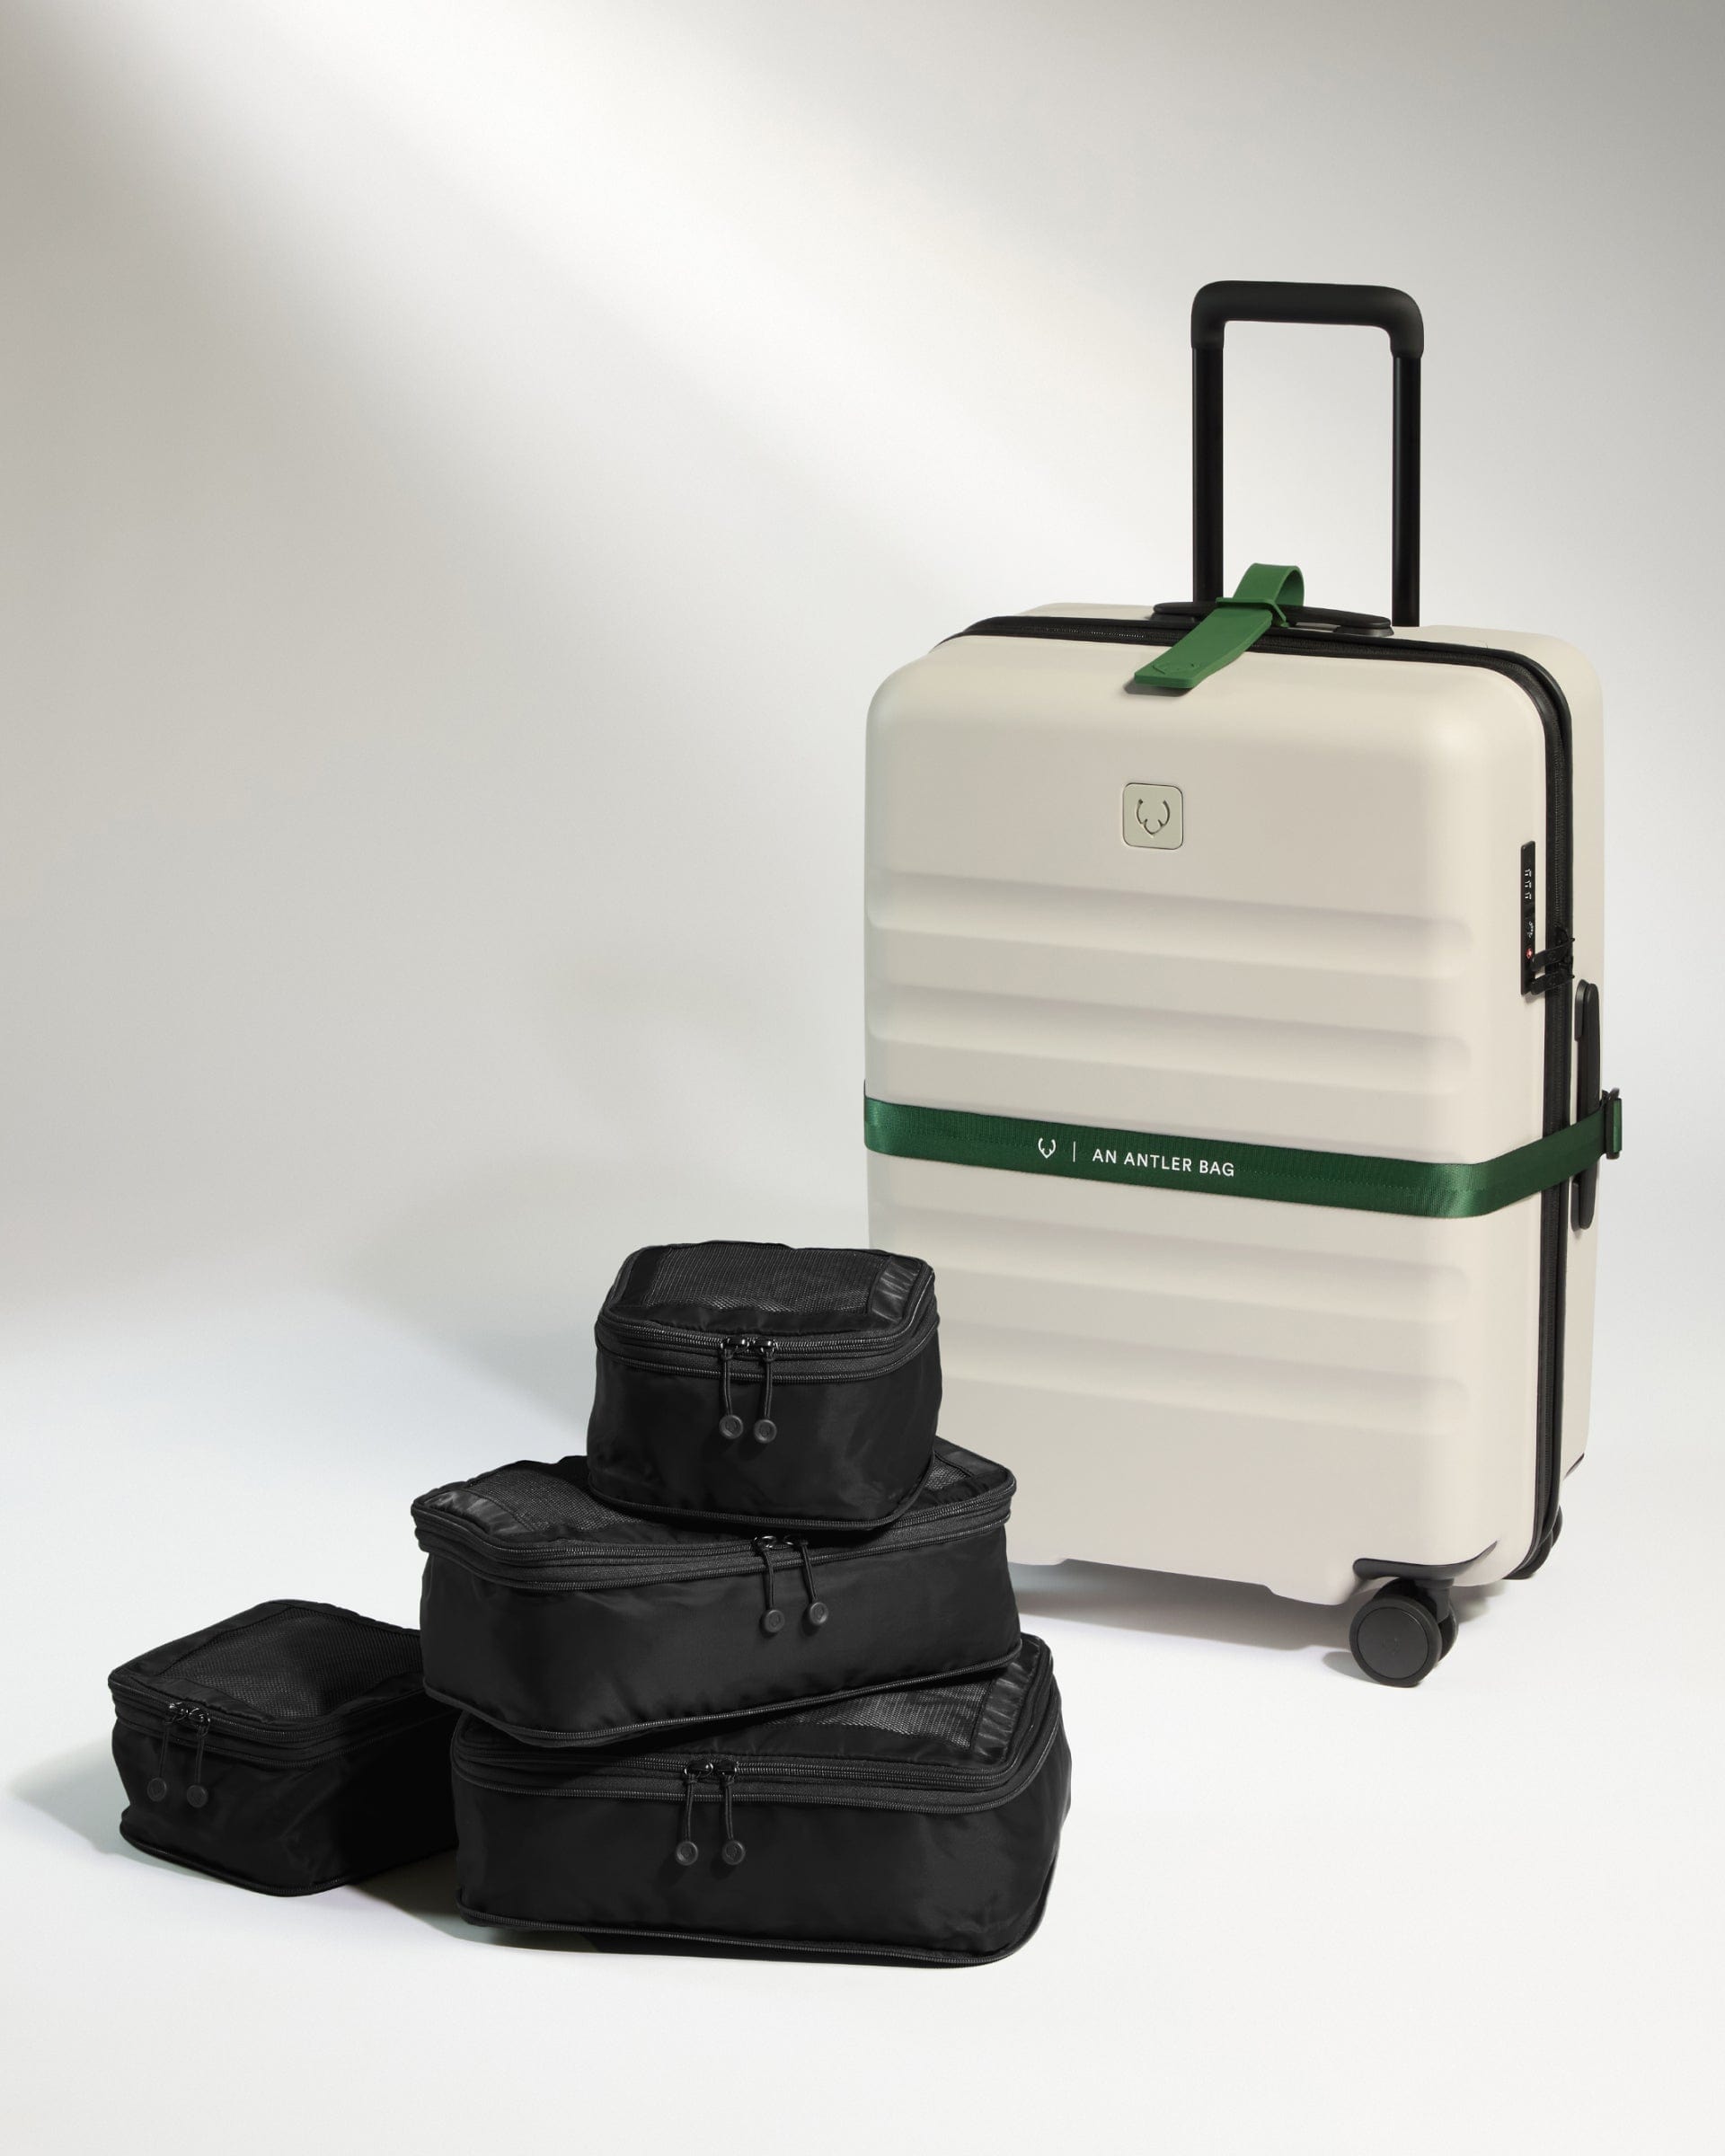 Antler Luggage -  Chelsea 4 packing cubes in black - Accessories Chelsea 4 Packing Cubes Black | Travel Accessories | Antler UK